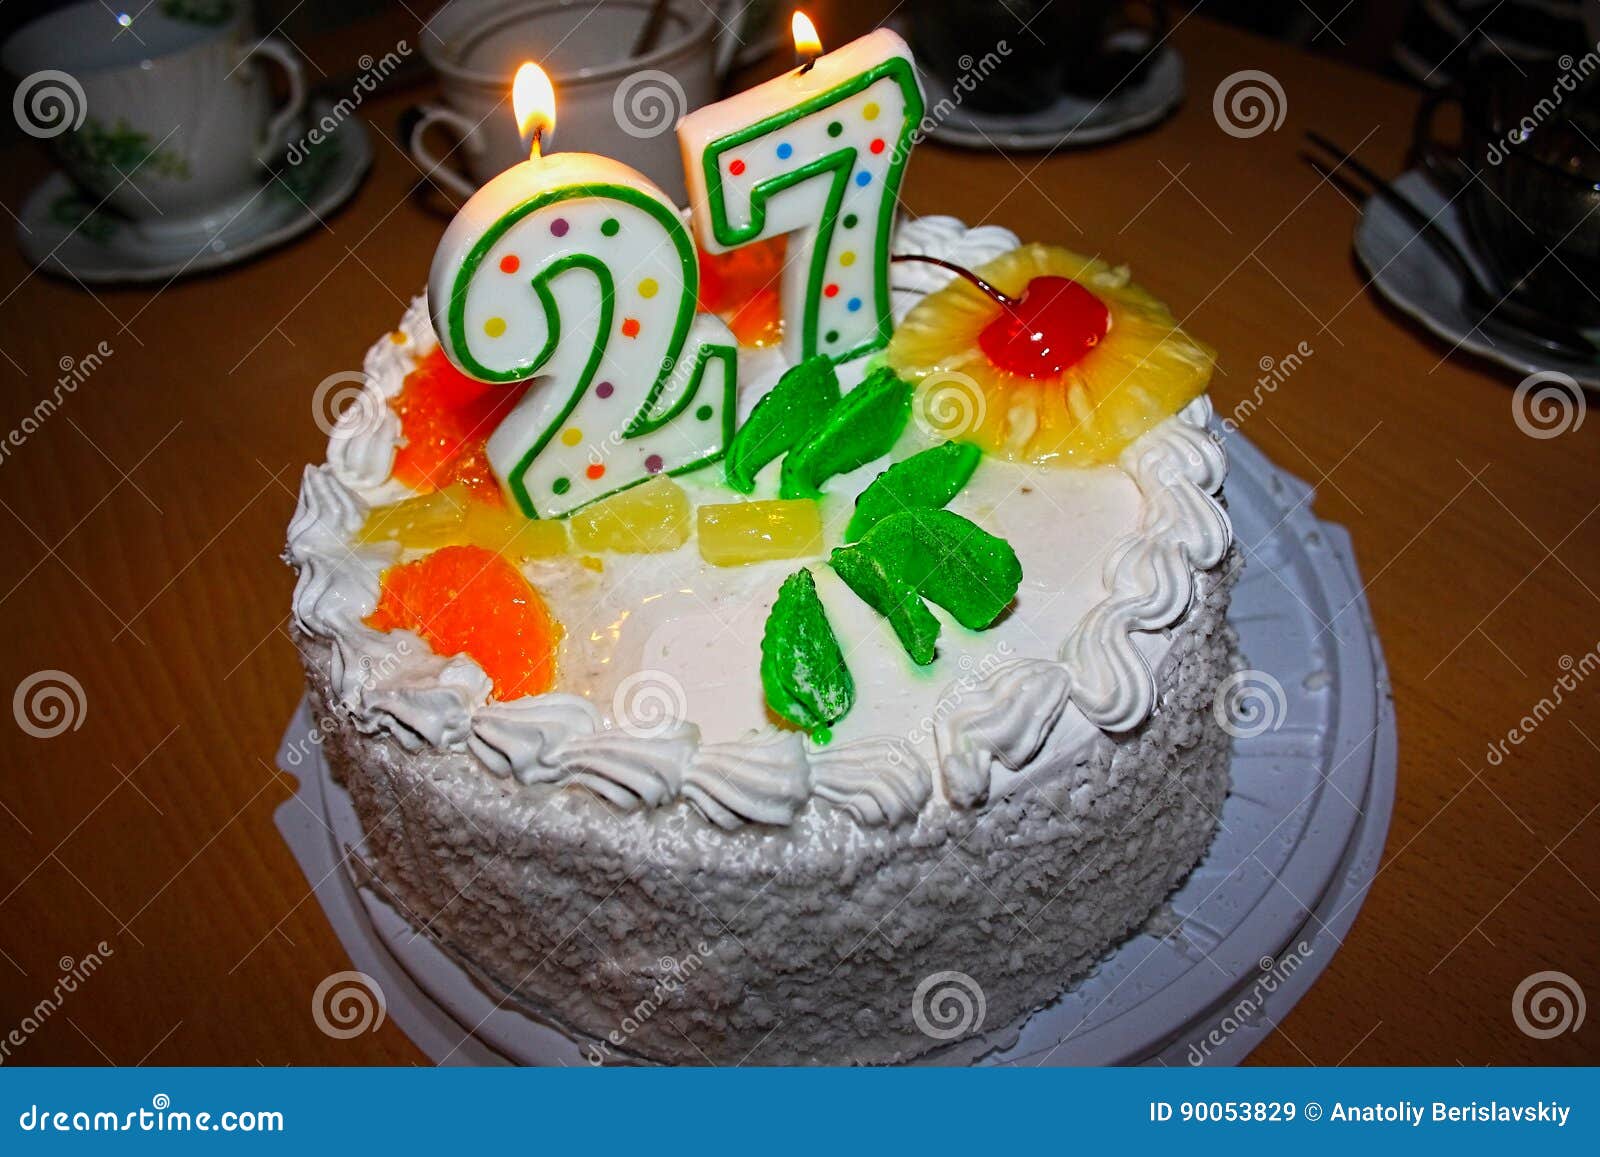 27 Birthday Cake Ideas - A Birthday Cake